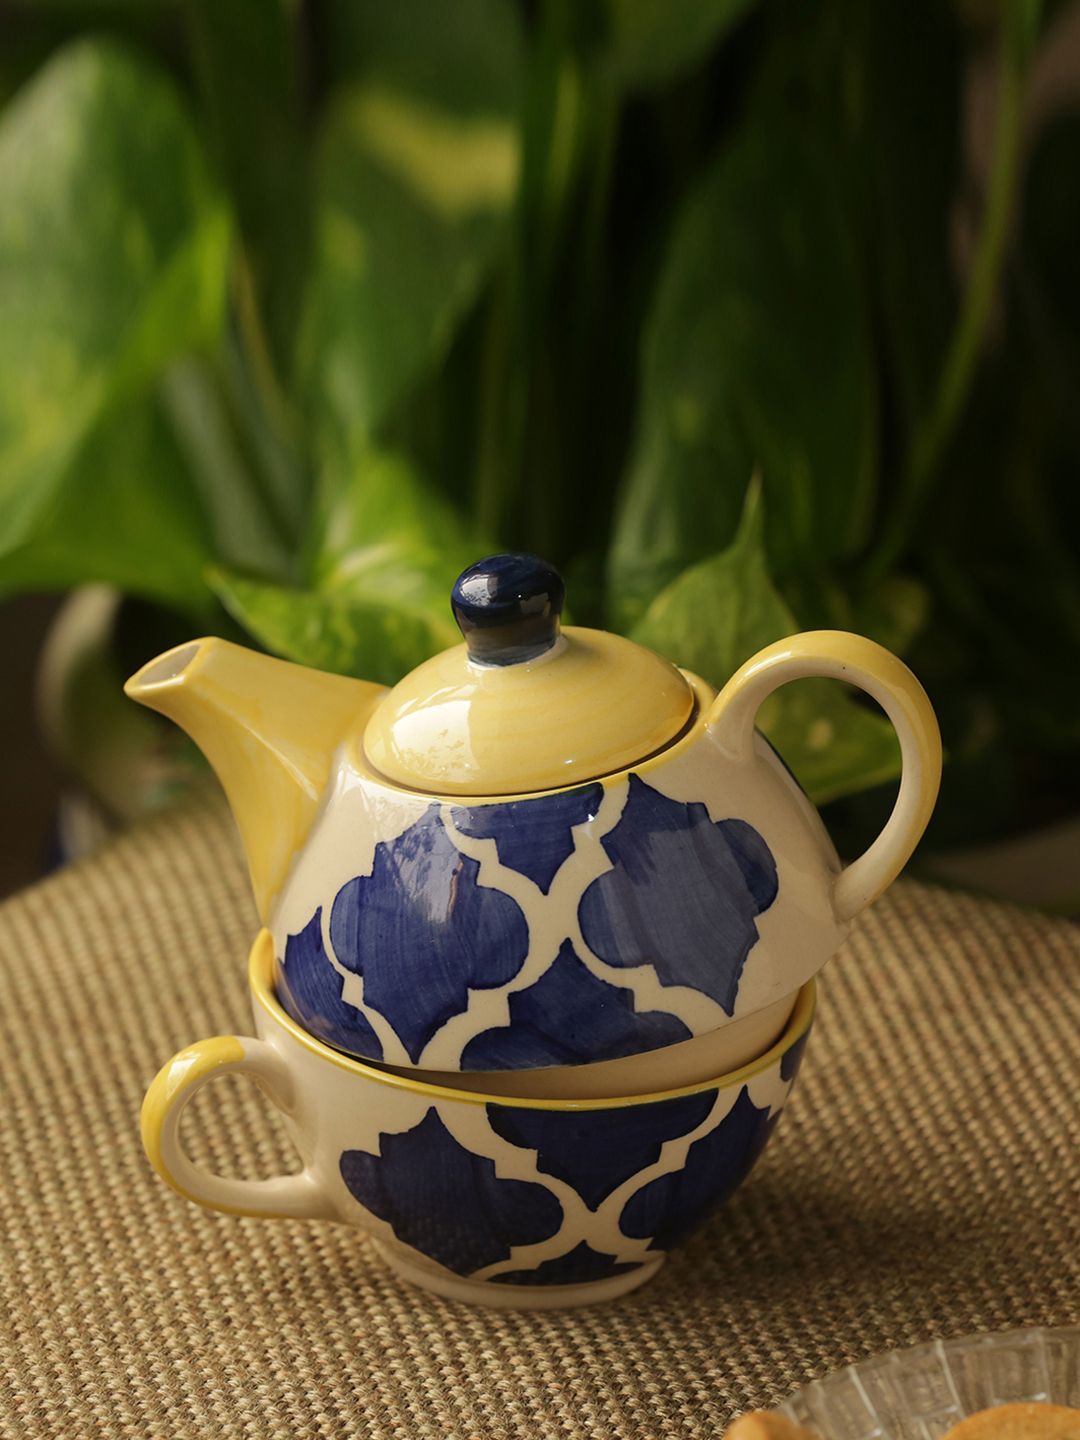 ExclusiveLane White & Blue 2-Pieces Textured Ceramic Kettle Set Price in India